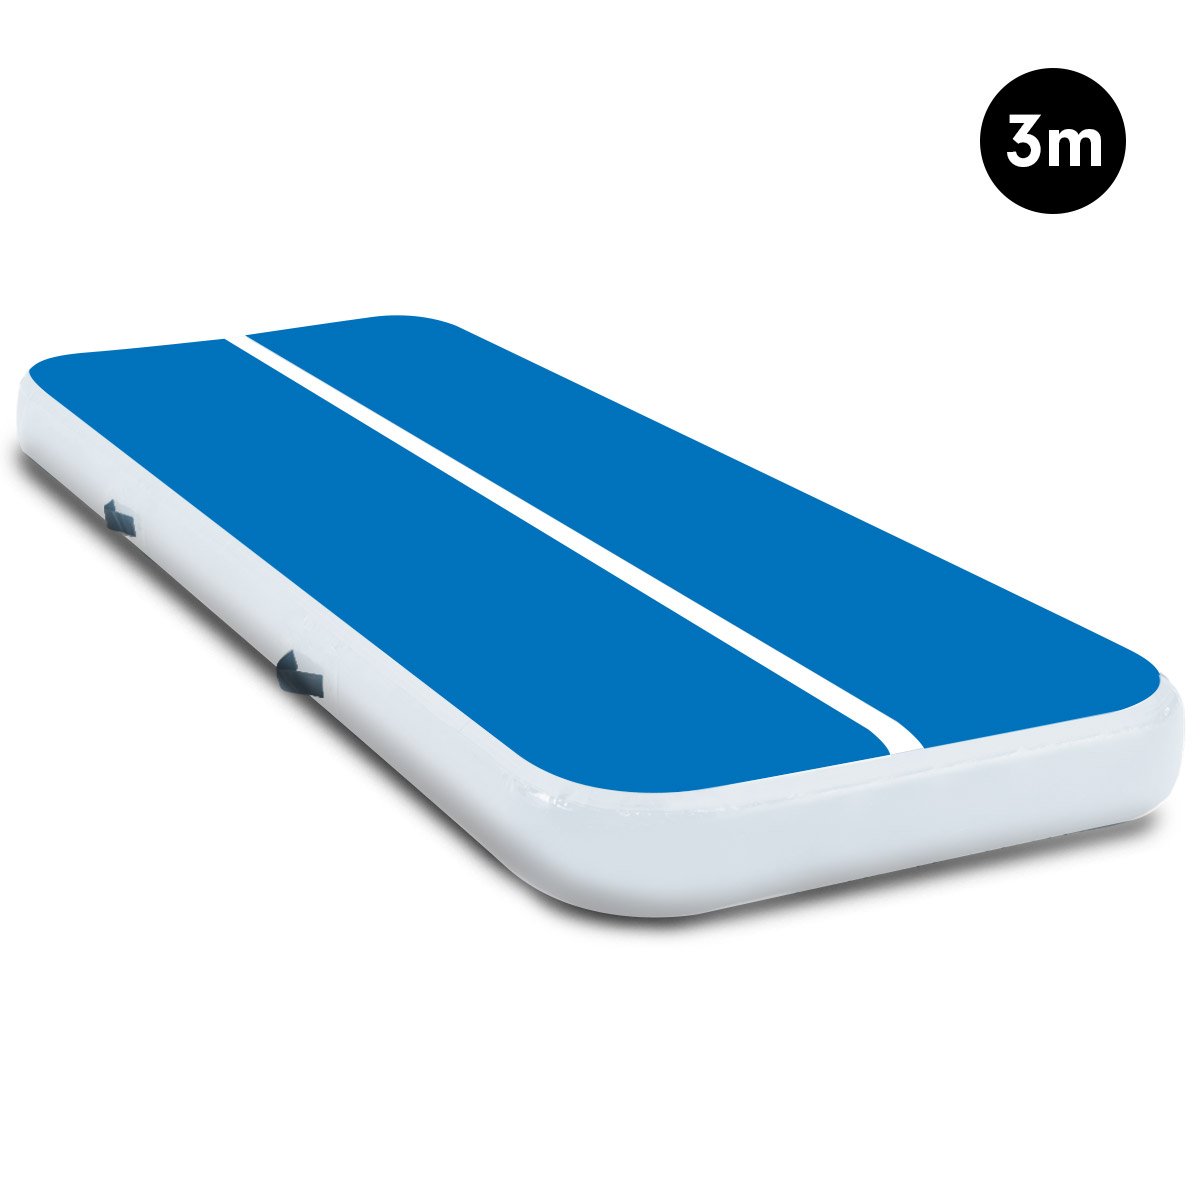 3m x 1m Air Track Inflatable Tumbling Gymnastics Mat - Blue White 1